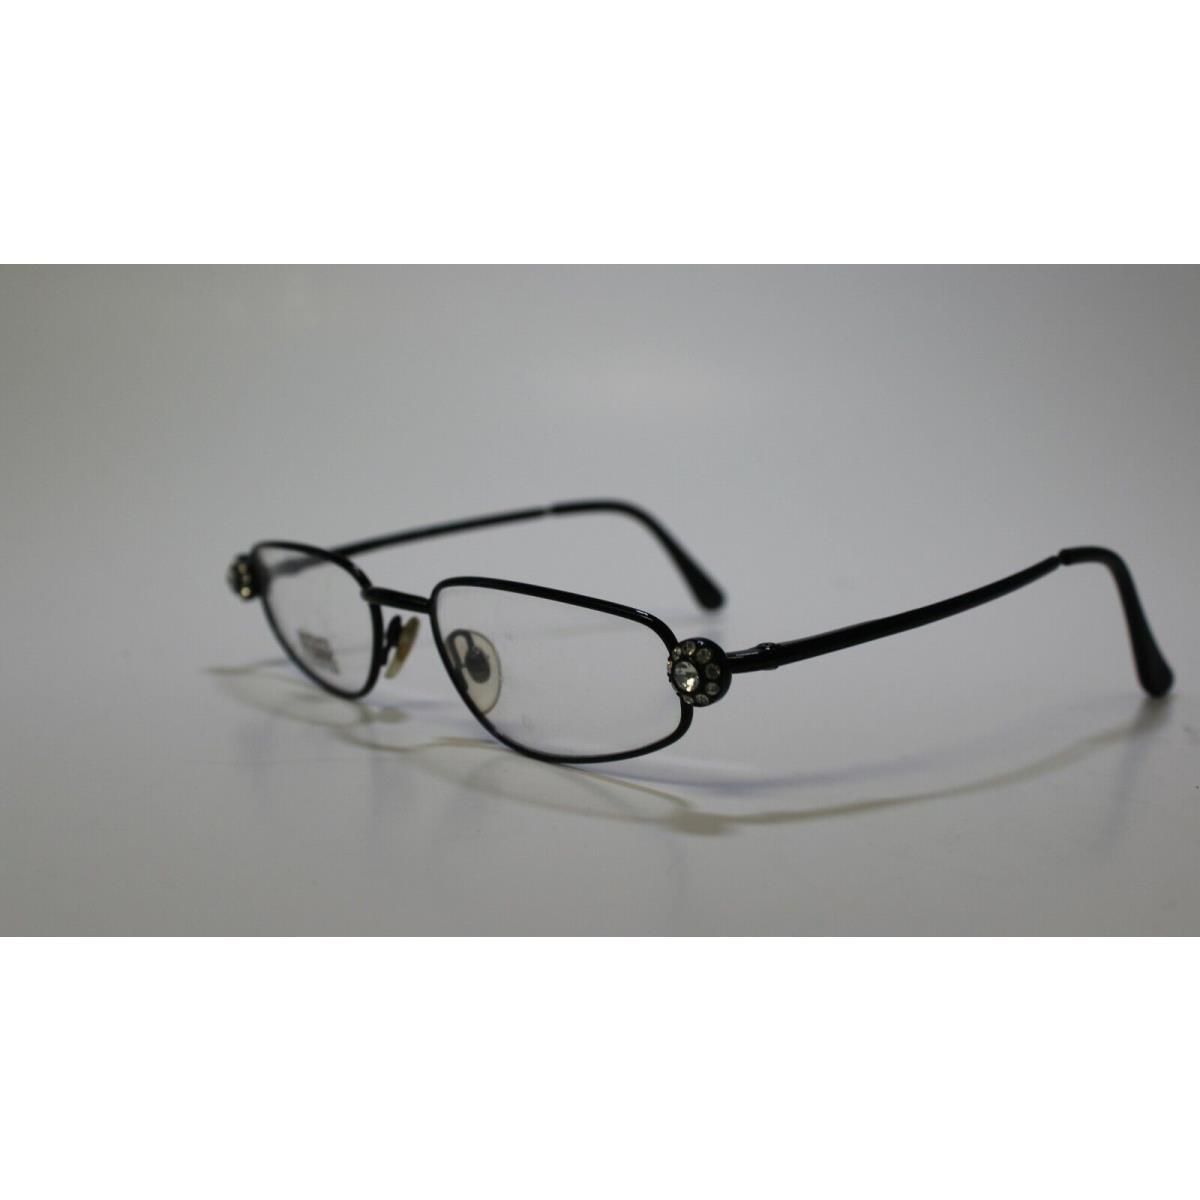 Gianfranco Ferre Gff 341 006 Black Eyeglasses 53-18-130